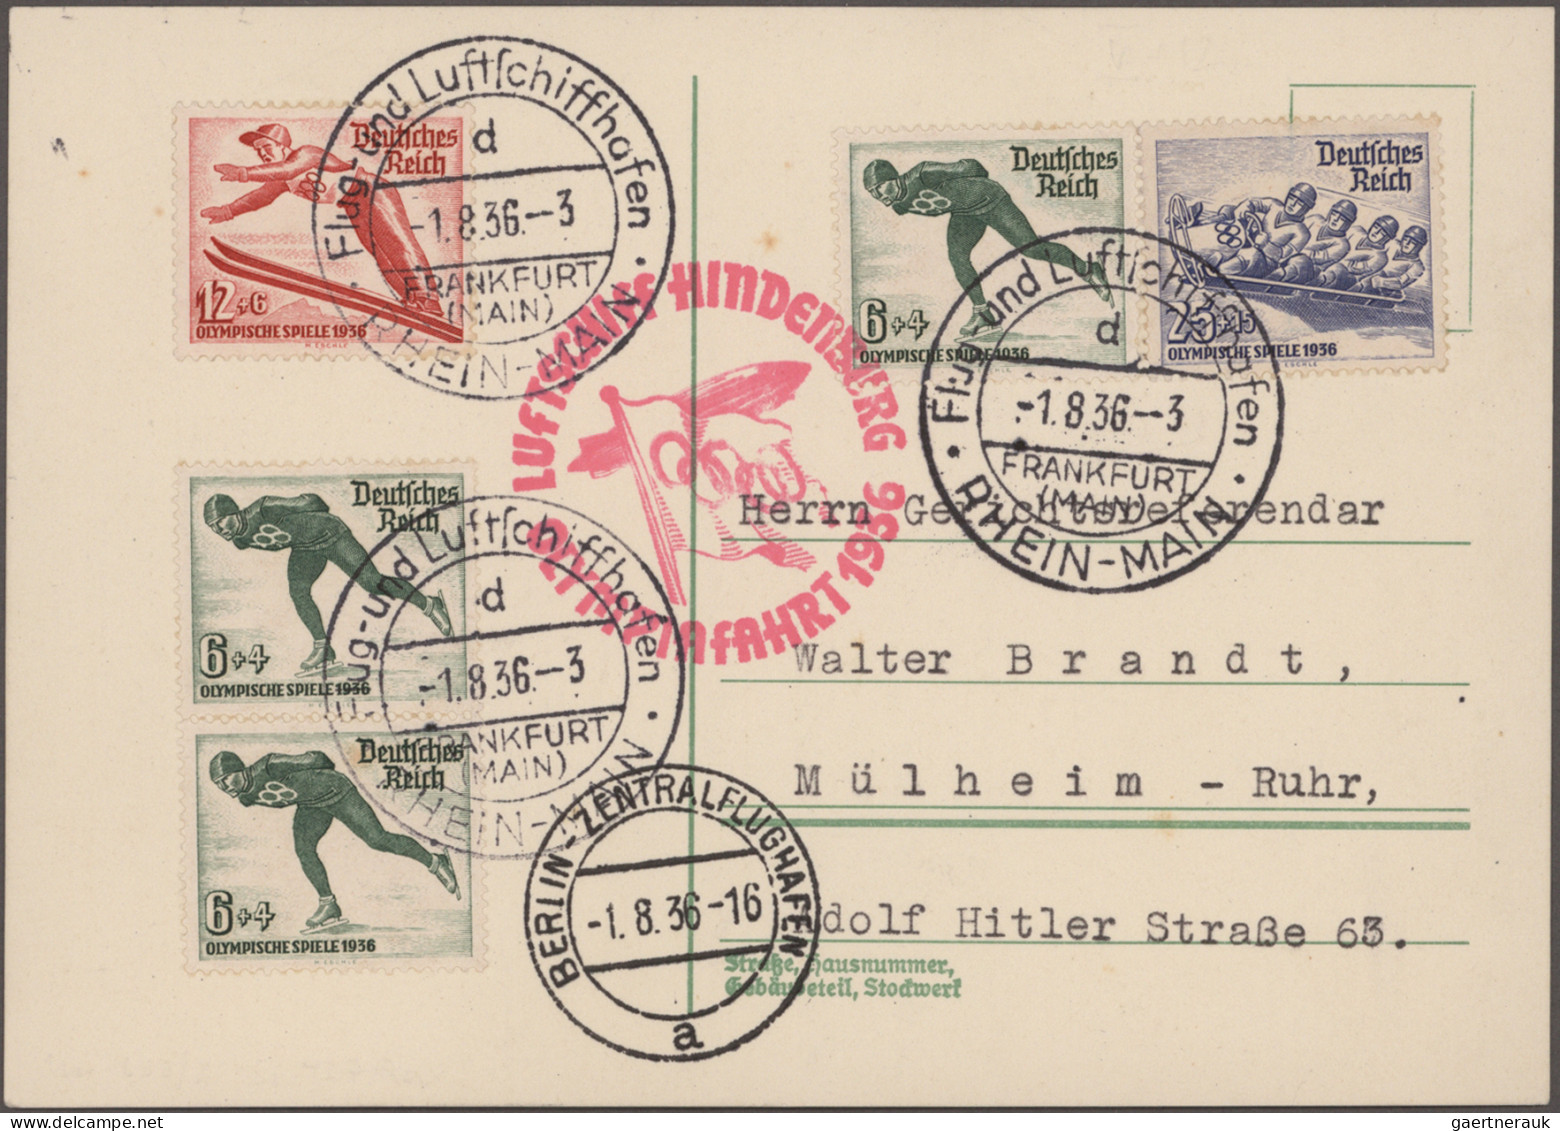 Zeppelin Mail - Germany: 1908/1937, kleines Lot mit 9 Zeppelin-Belegen mit inter